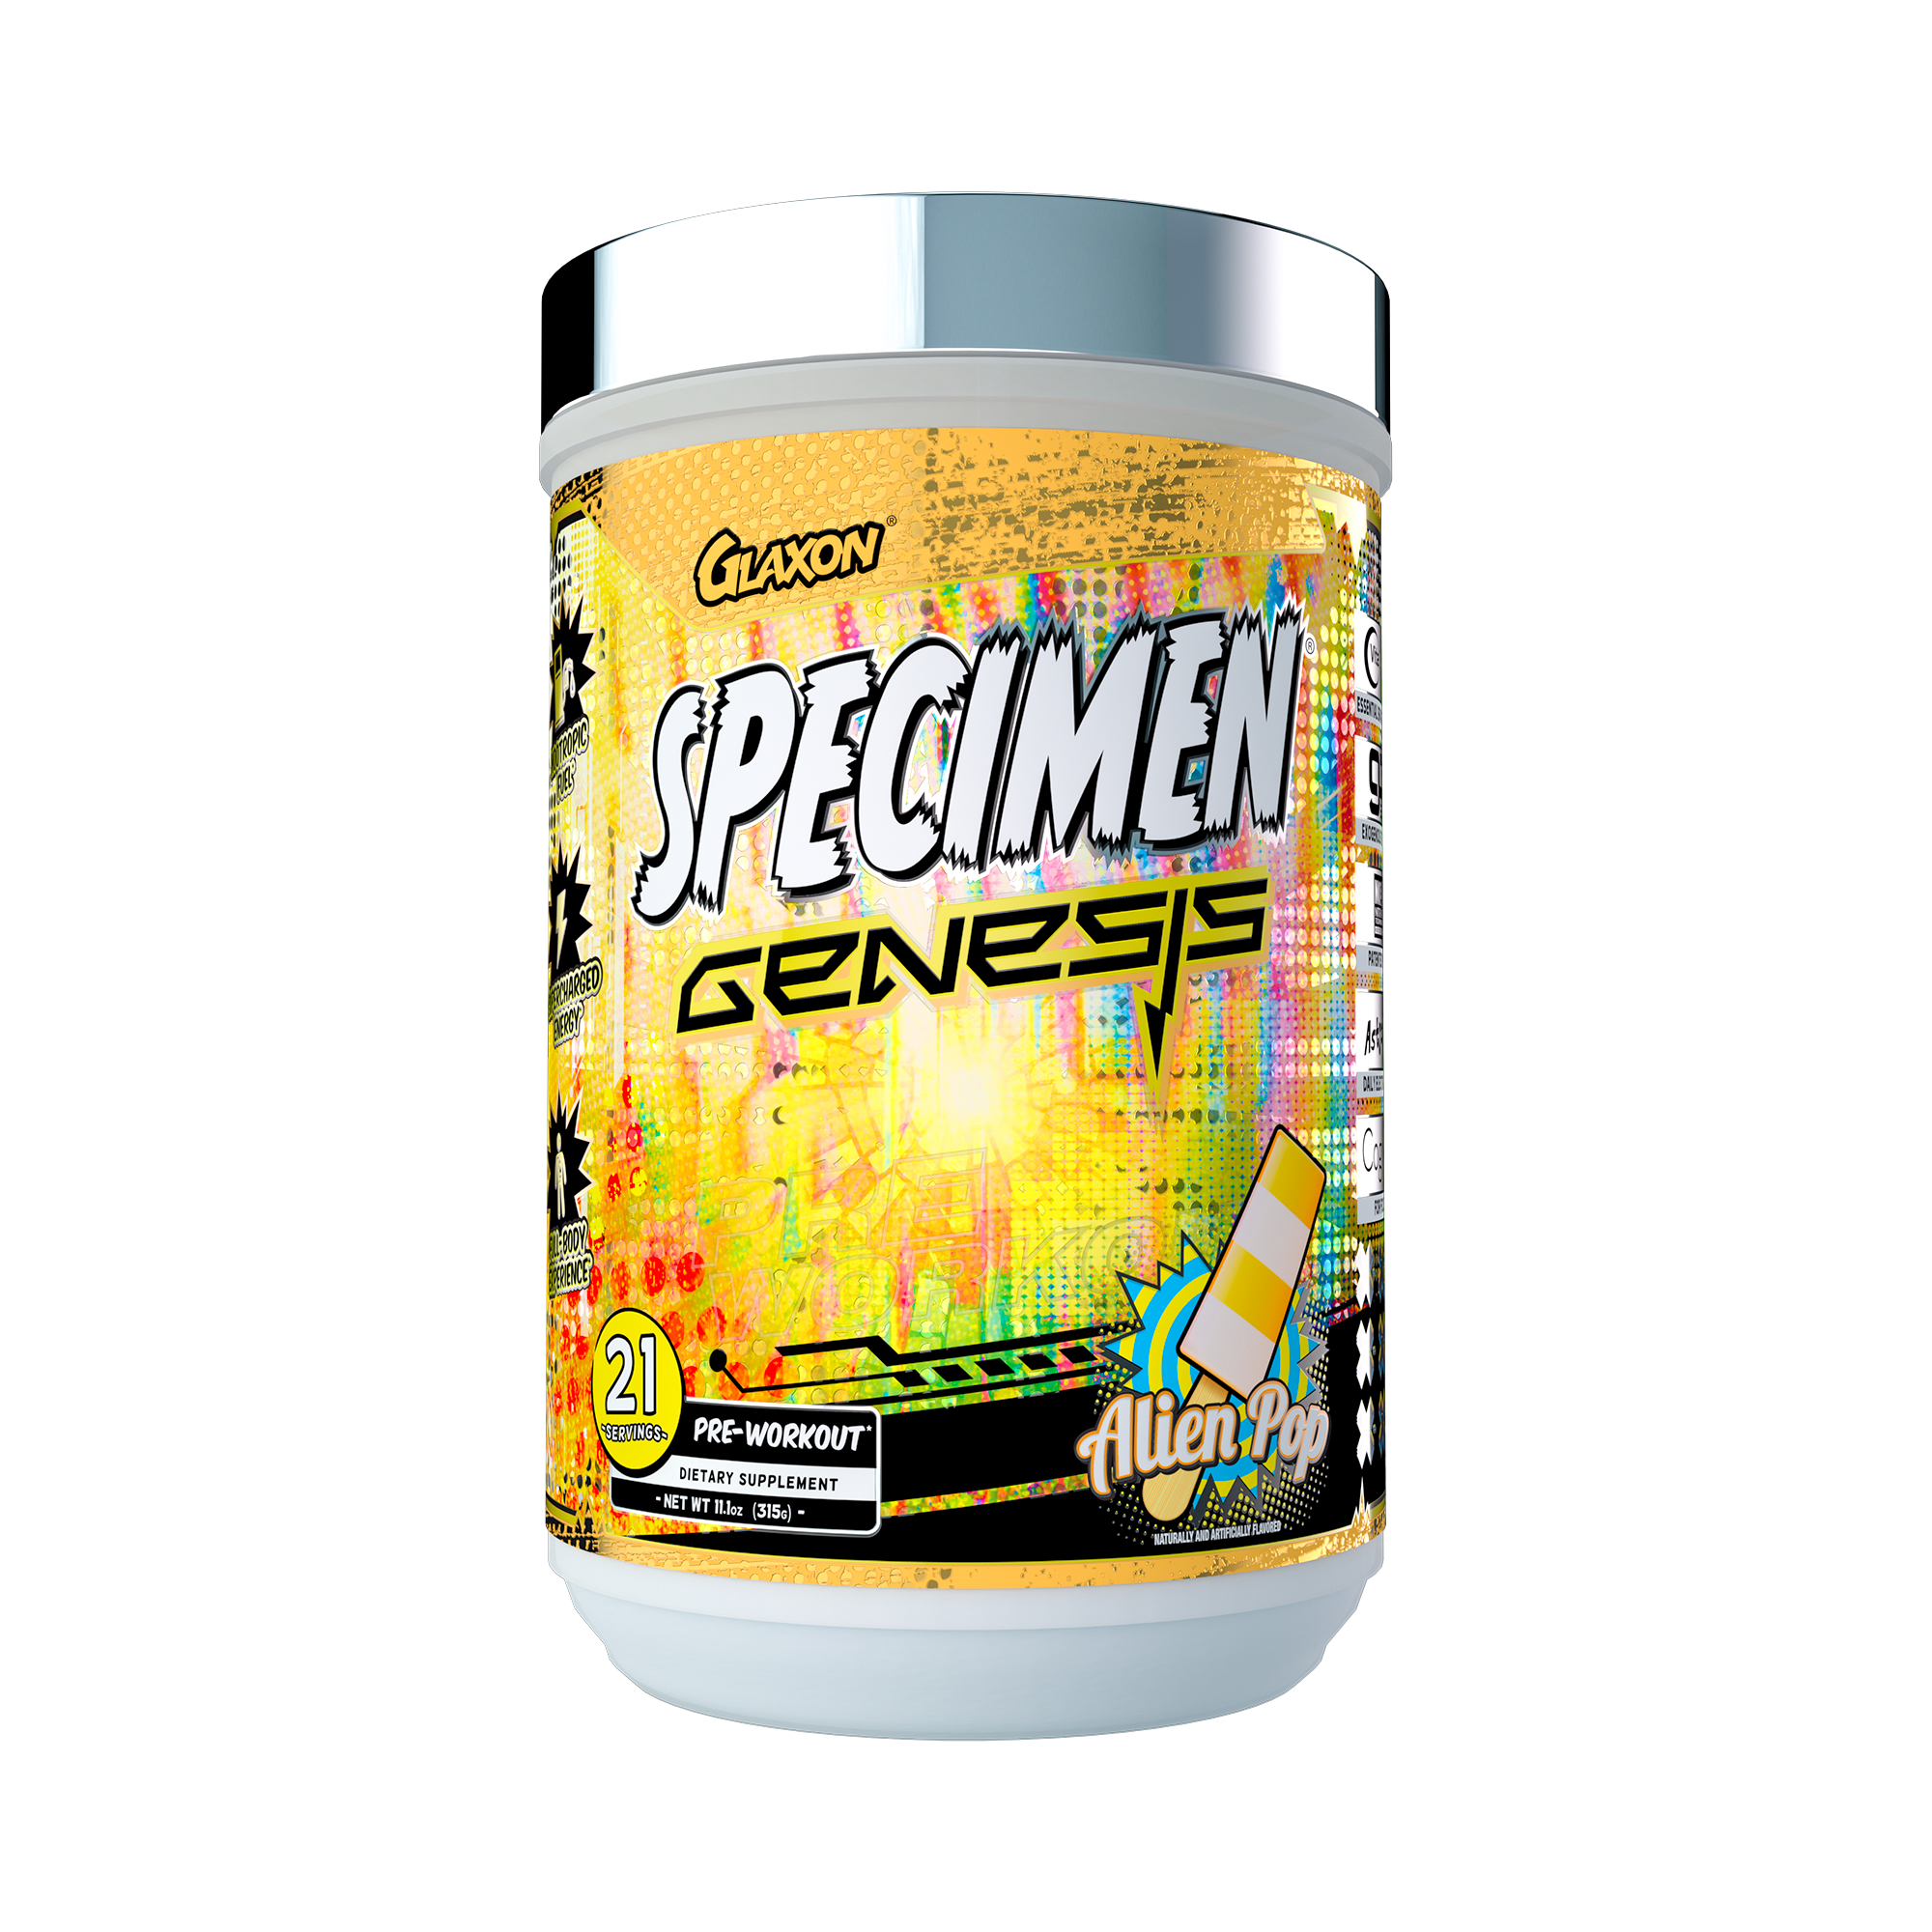 Glaxon Specimen Genesis - Stimulant Pre-Workout